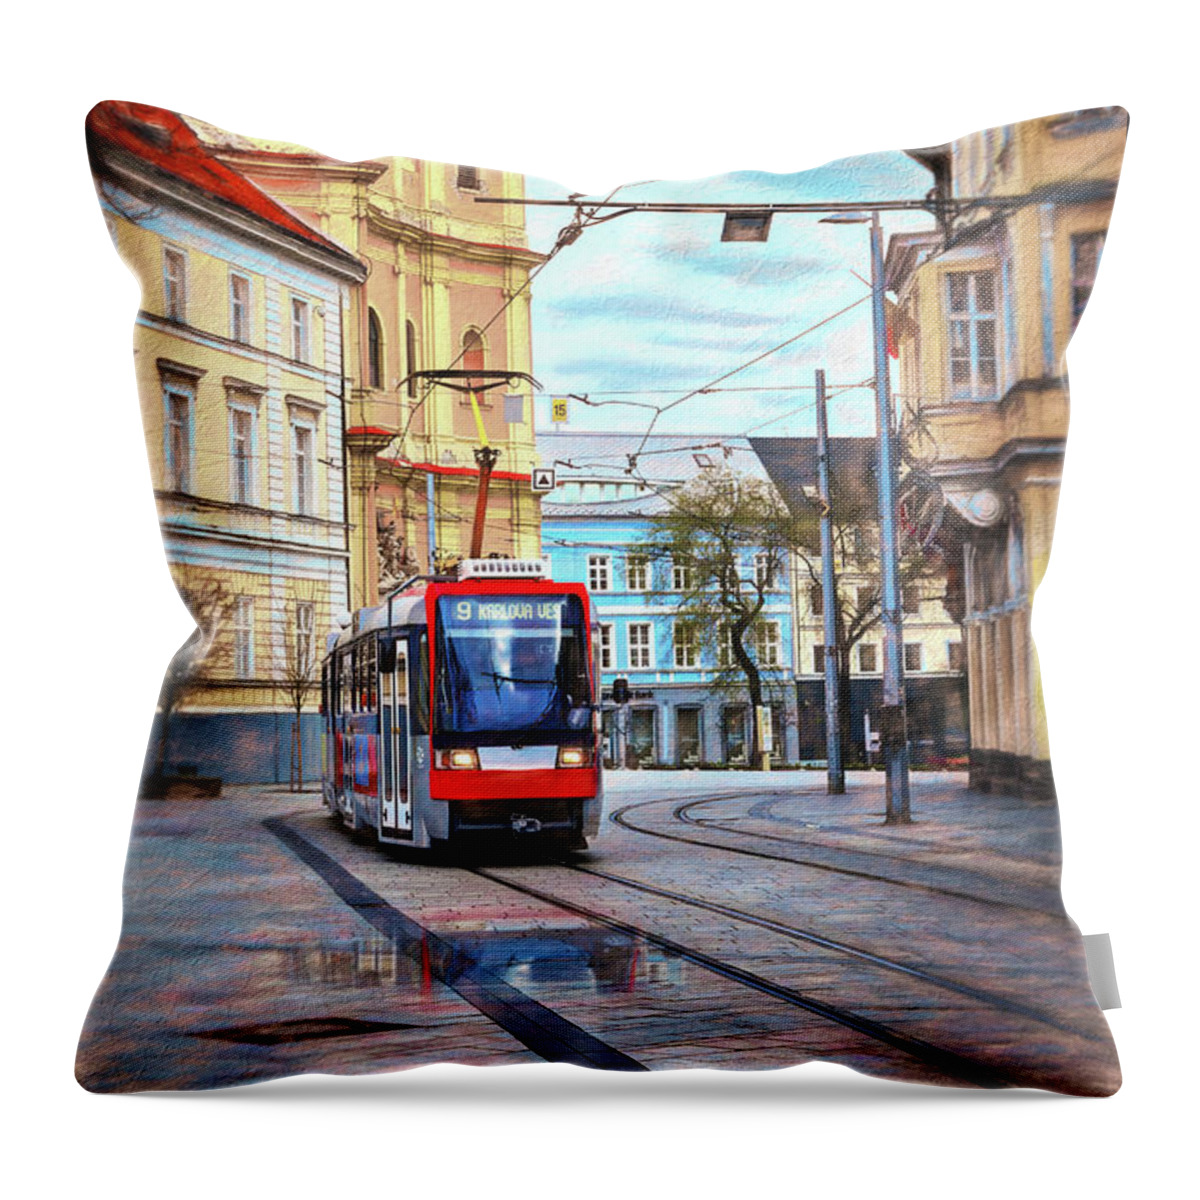 Bratislava Throw Pillow featuring the photograph City Tram Bratislava Slovakia by Carol Japp